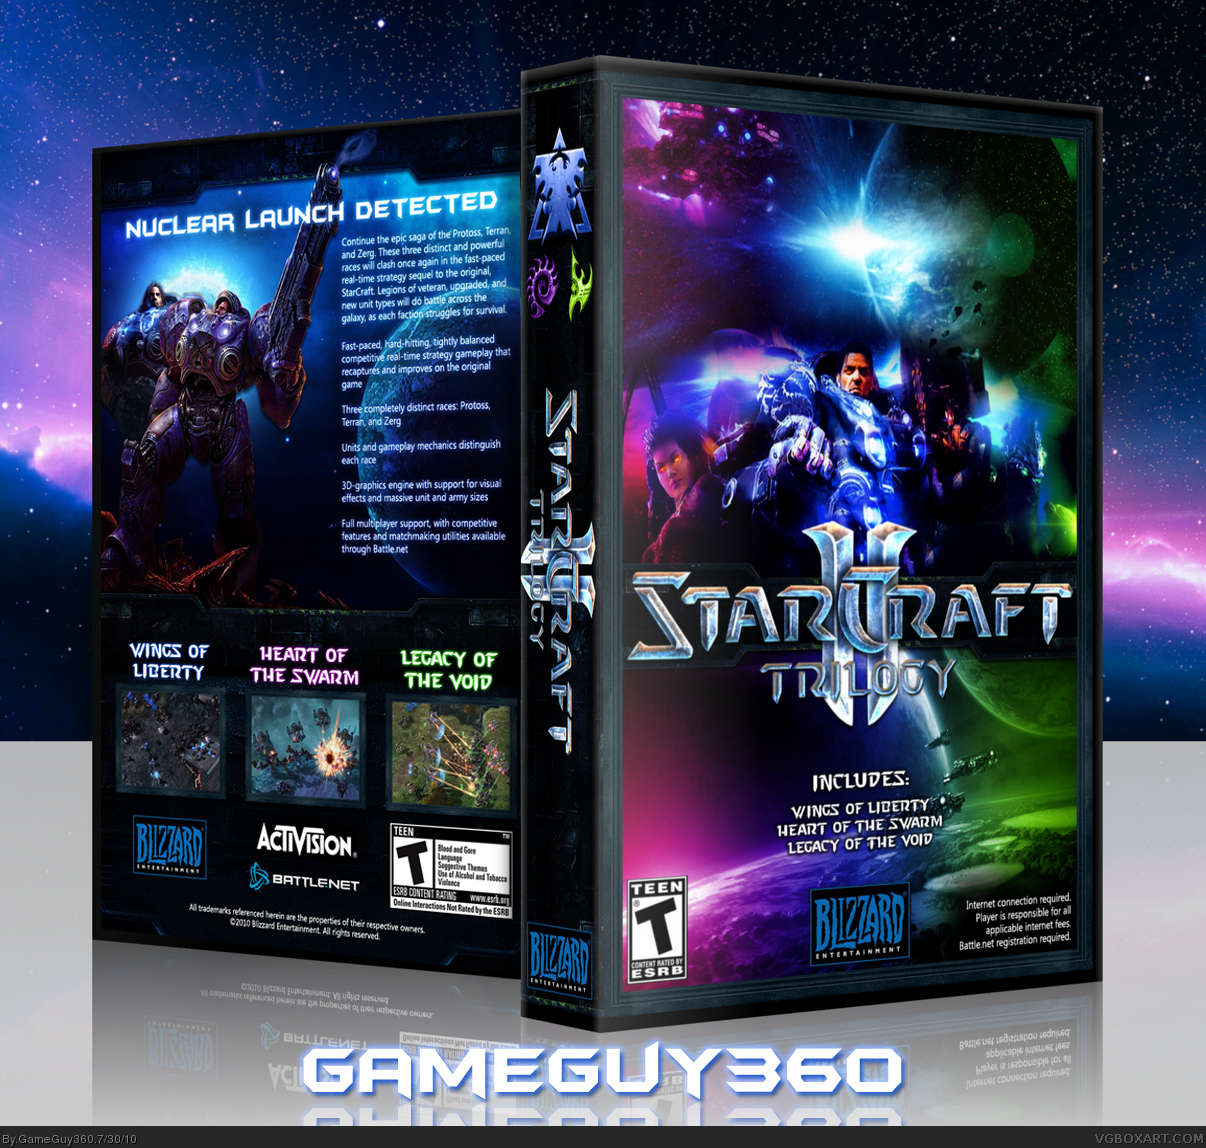 Starcraft II Trilogy box cover